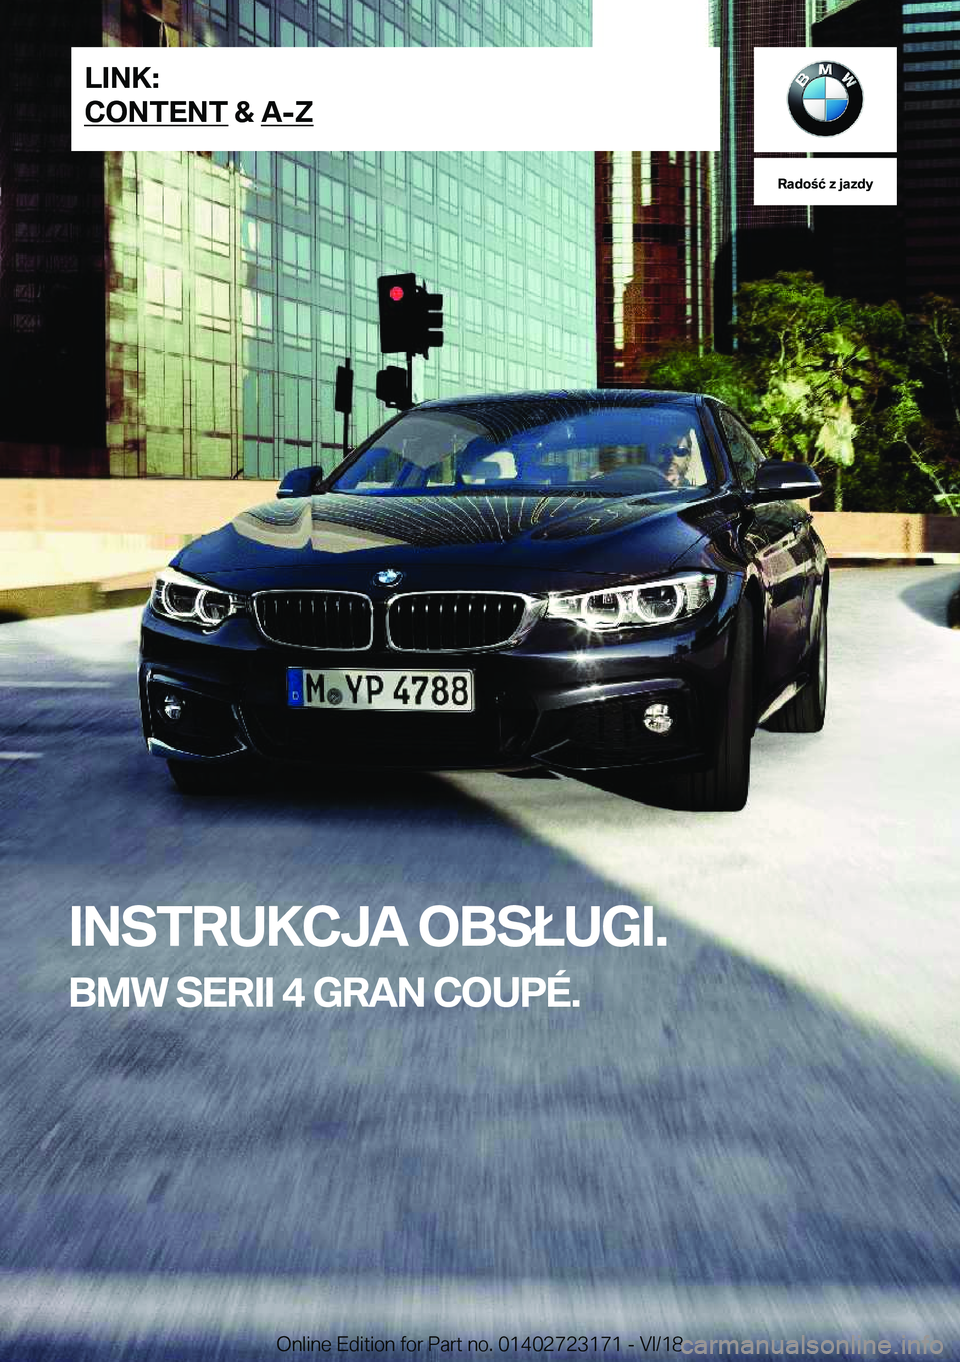 BMW 4 SERIES GRAN COUPE 2019  Instrukcja obsługi (in Polish) �R�a�d�o�ć��z��j�a�z�d�y
�I�N�S�T�R�U�K�C�J�A��O�B�S�Ł�U�G�I�.
�B�M�W��S�E�R�I�I��4��G�R�A�N��C�O�U�P�